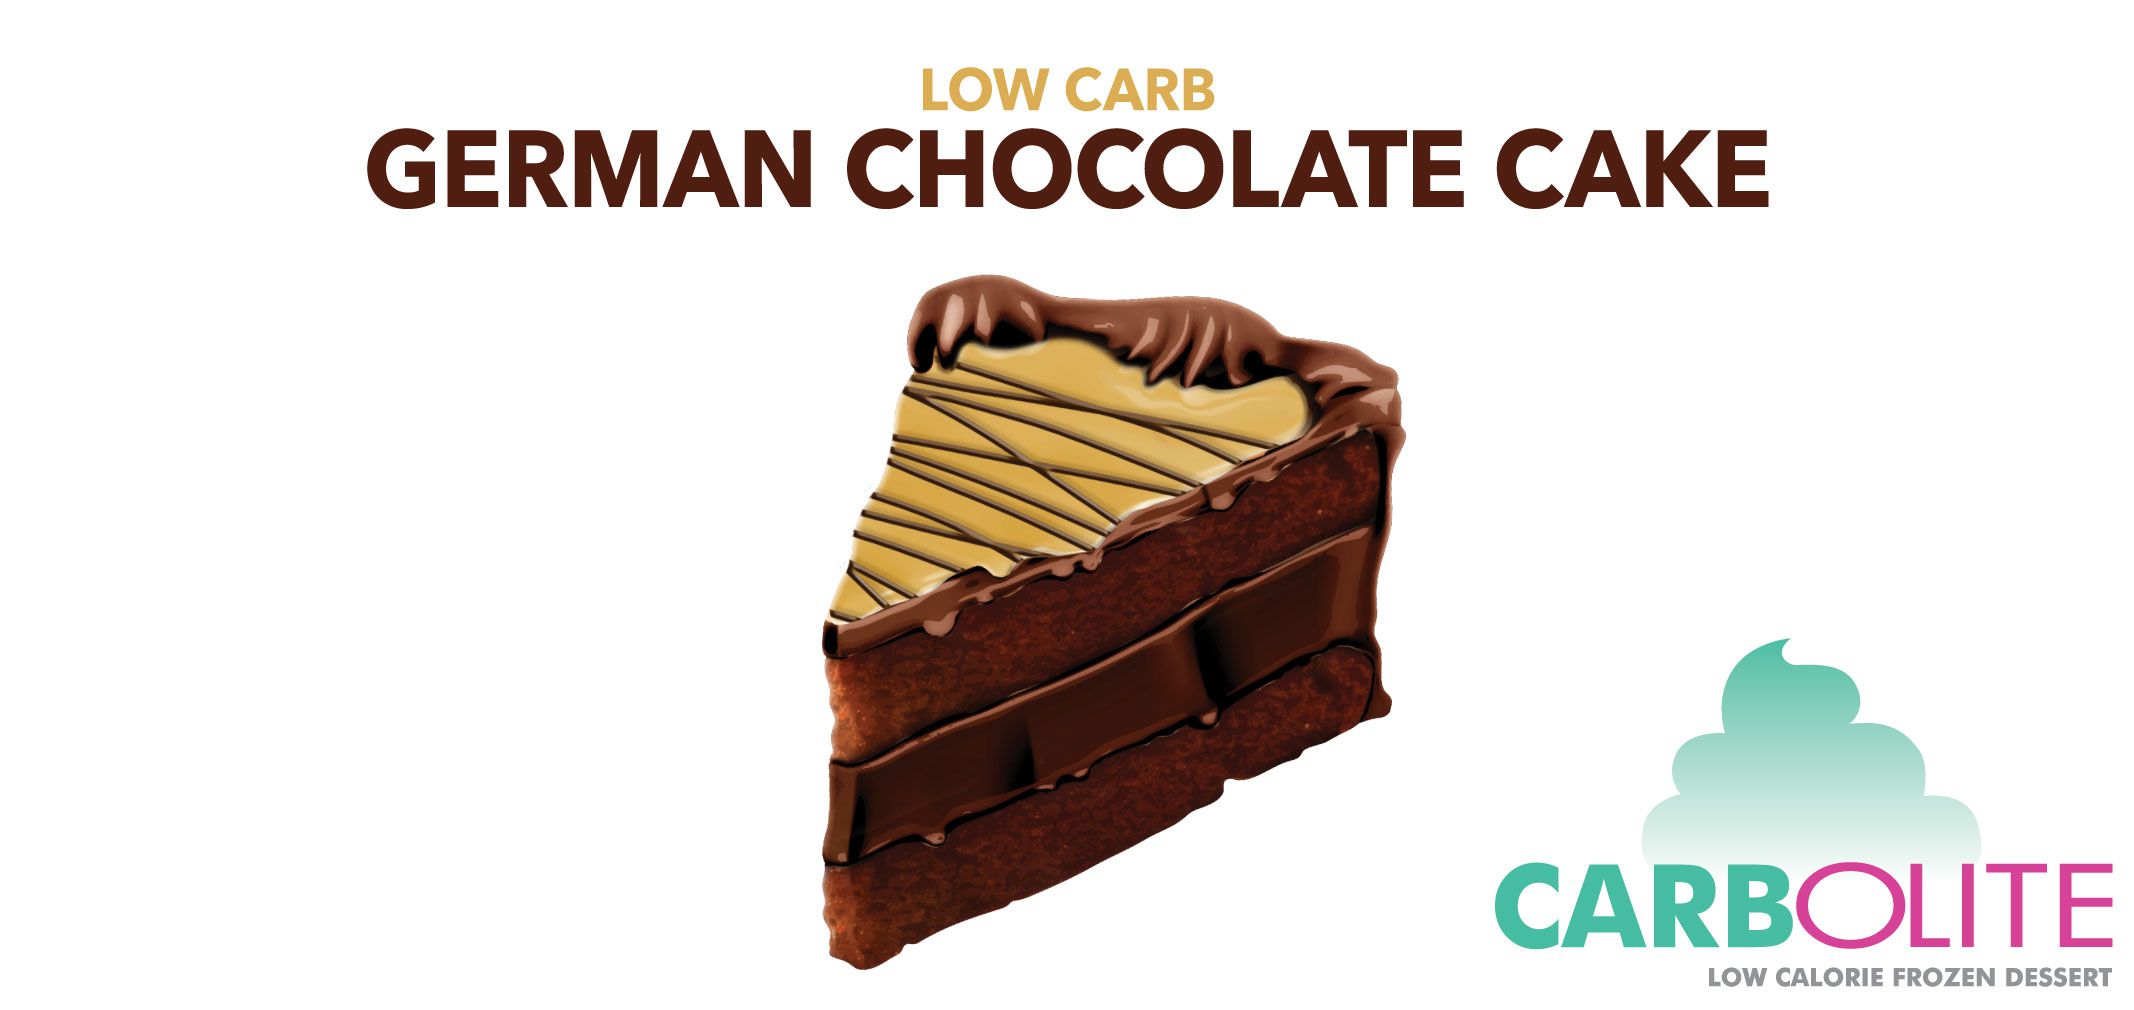 carbolite low carb no sugar added german chocolate cake  label image